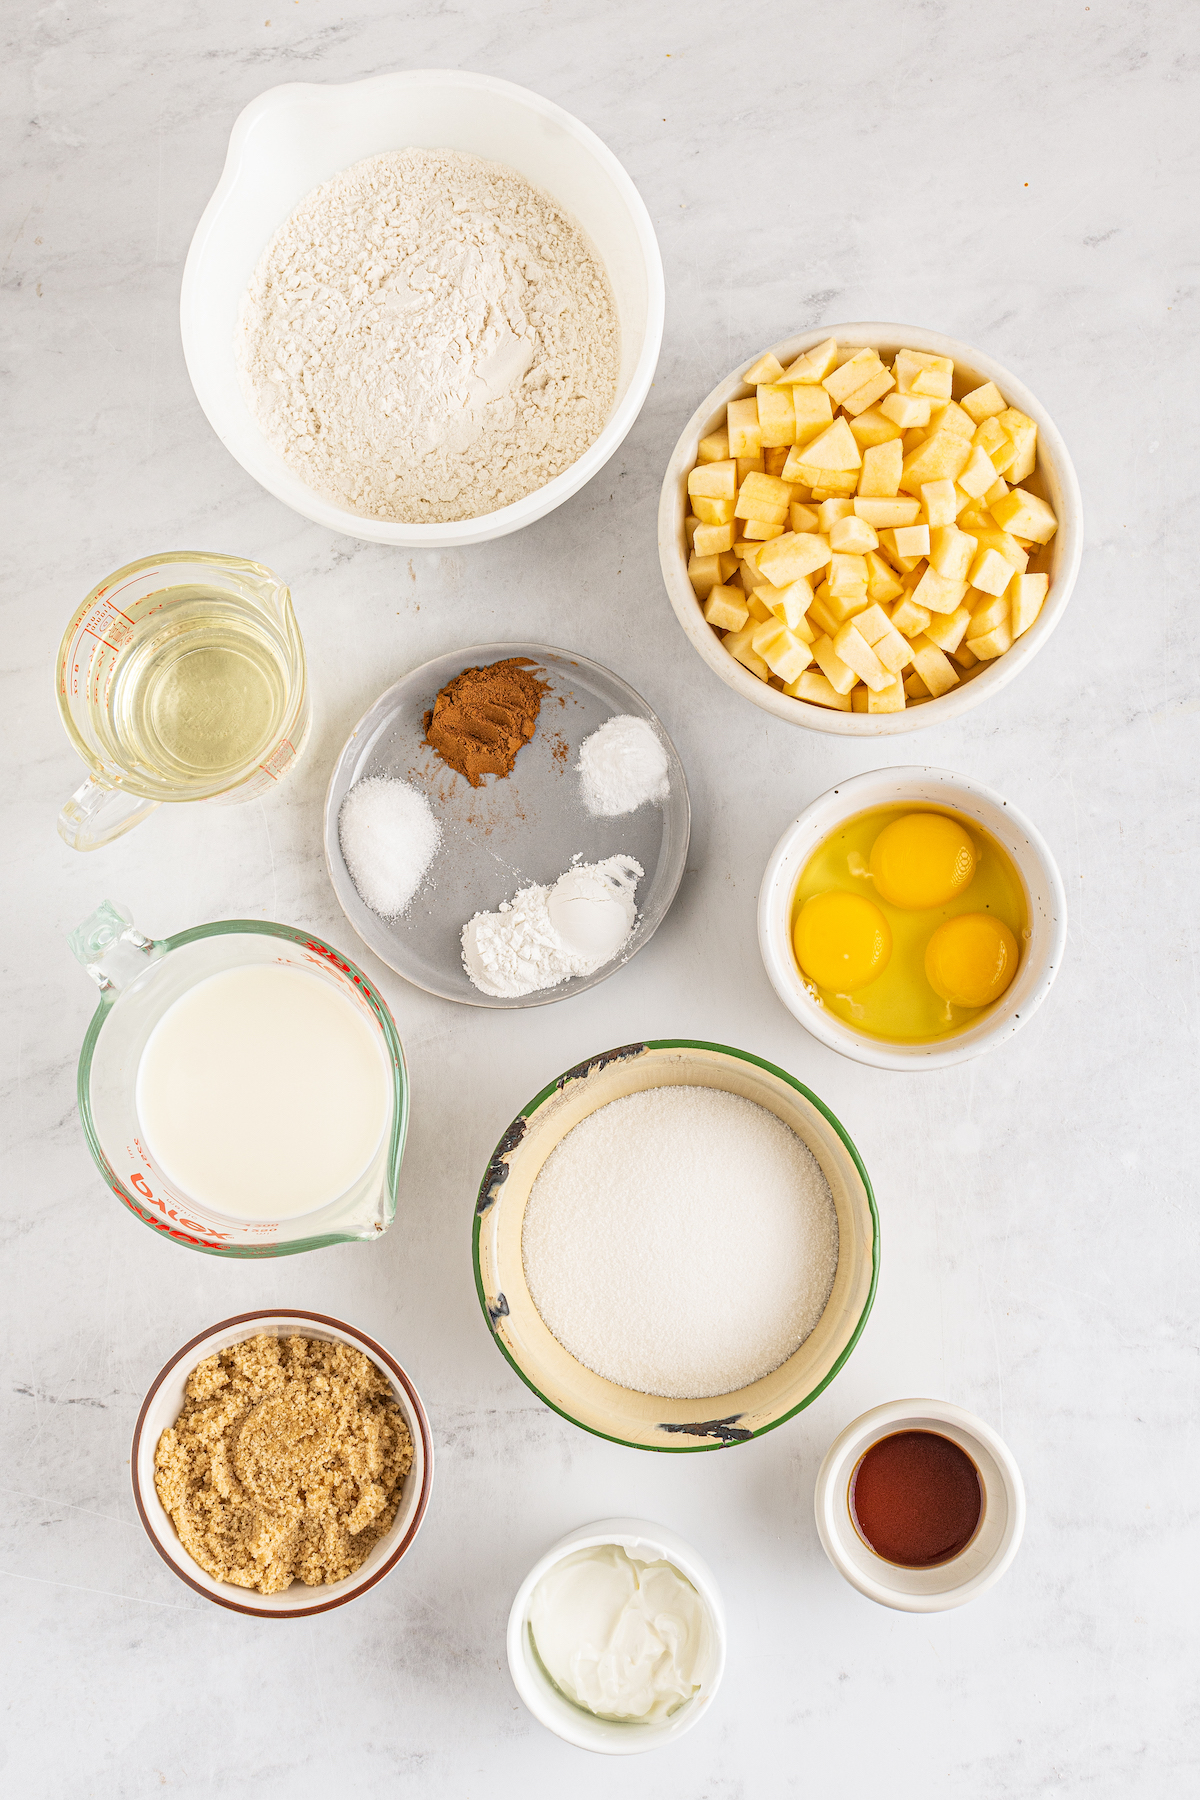 From top left: Flour, chopped apple, vegetable oil, cinnamon, salt, baking soda, baking powder, eggs and an extra egg yolk, milk, sour cream, brown sugar, vanilla,